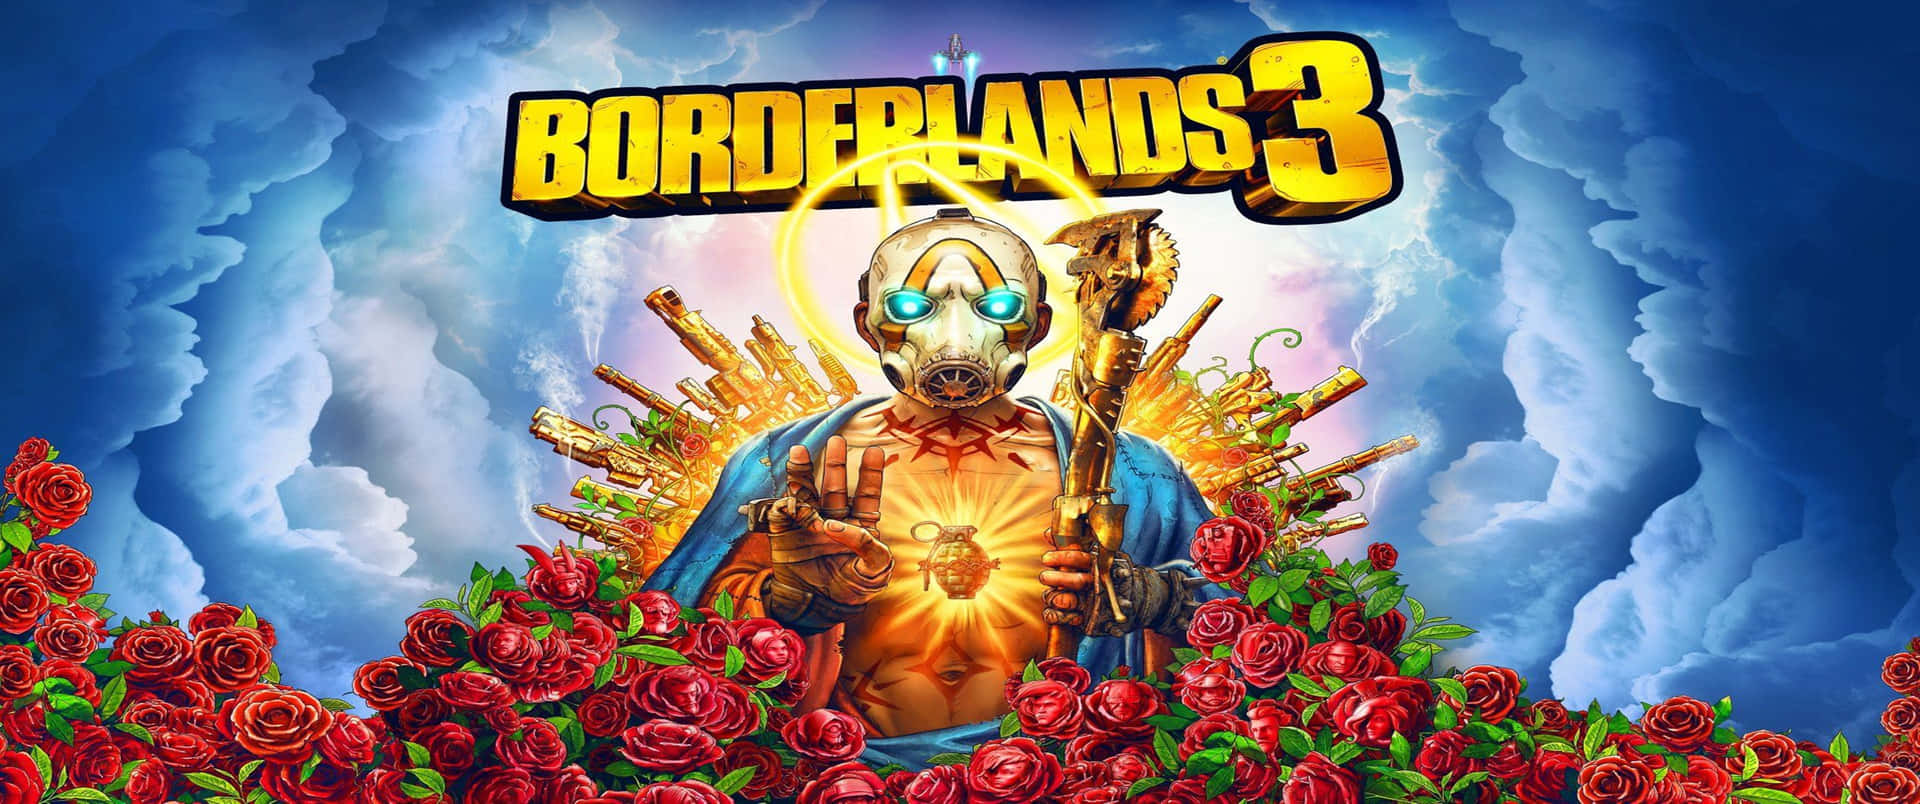 3440x1440p Borderlands 3 Background Roses&Steve